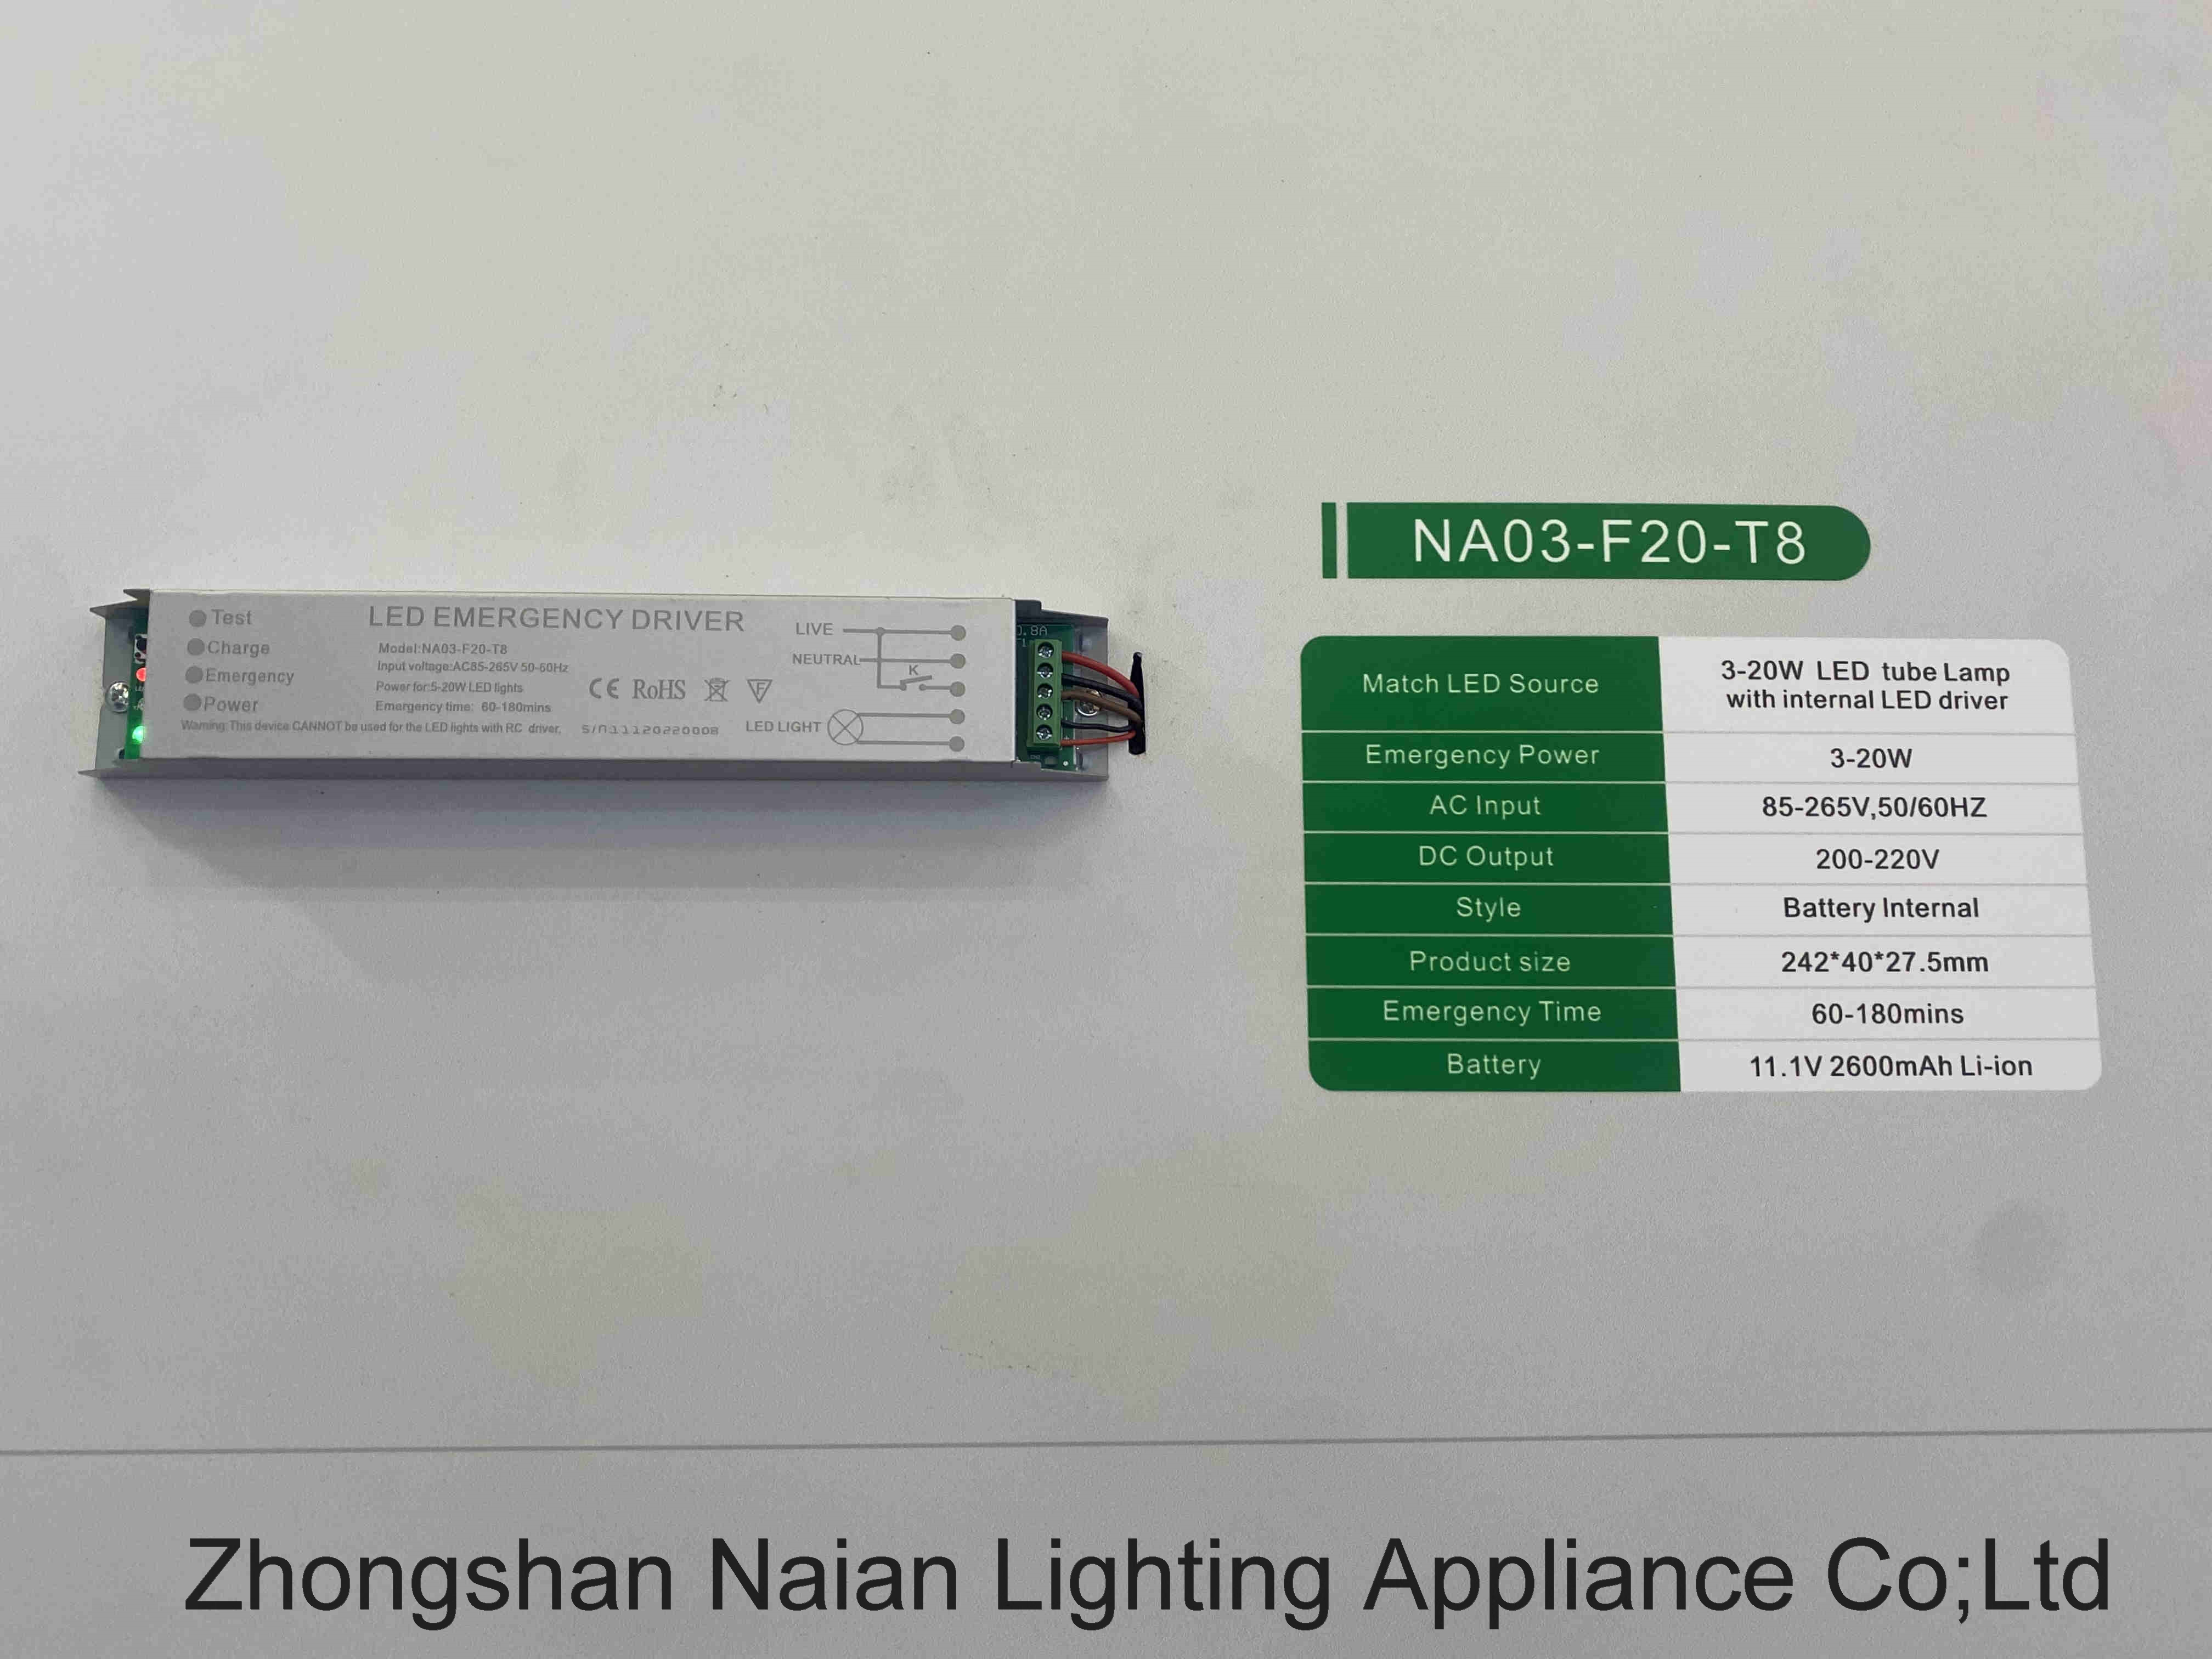 3-20W LED tube Lampwith internal LED driver